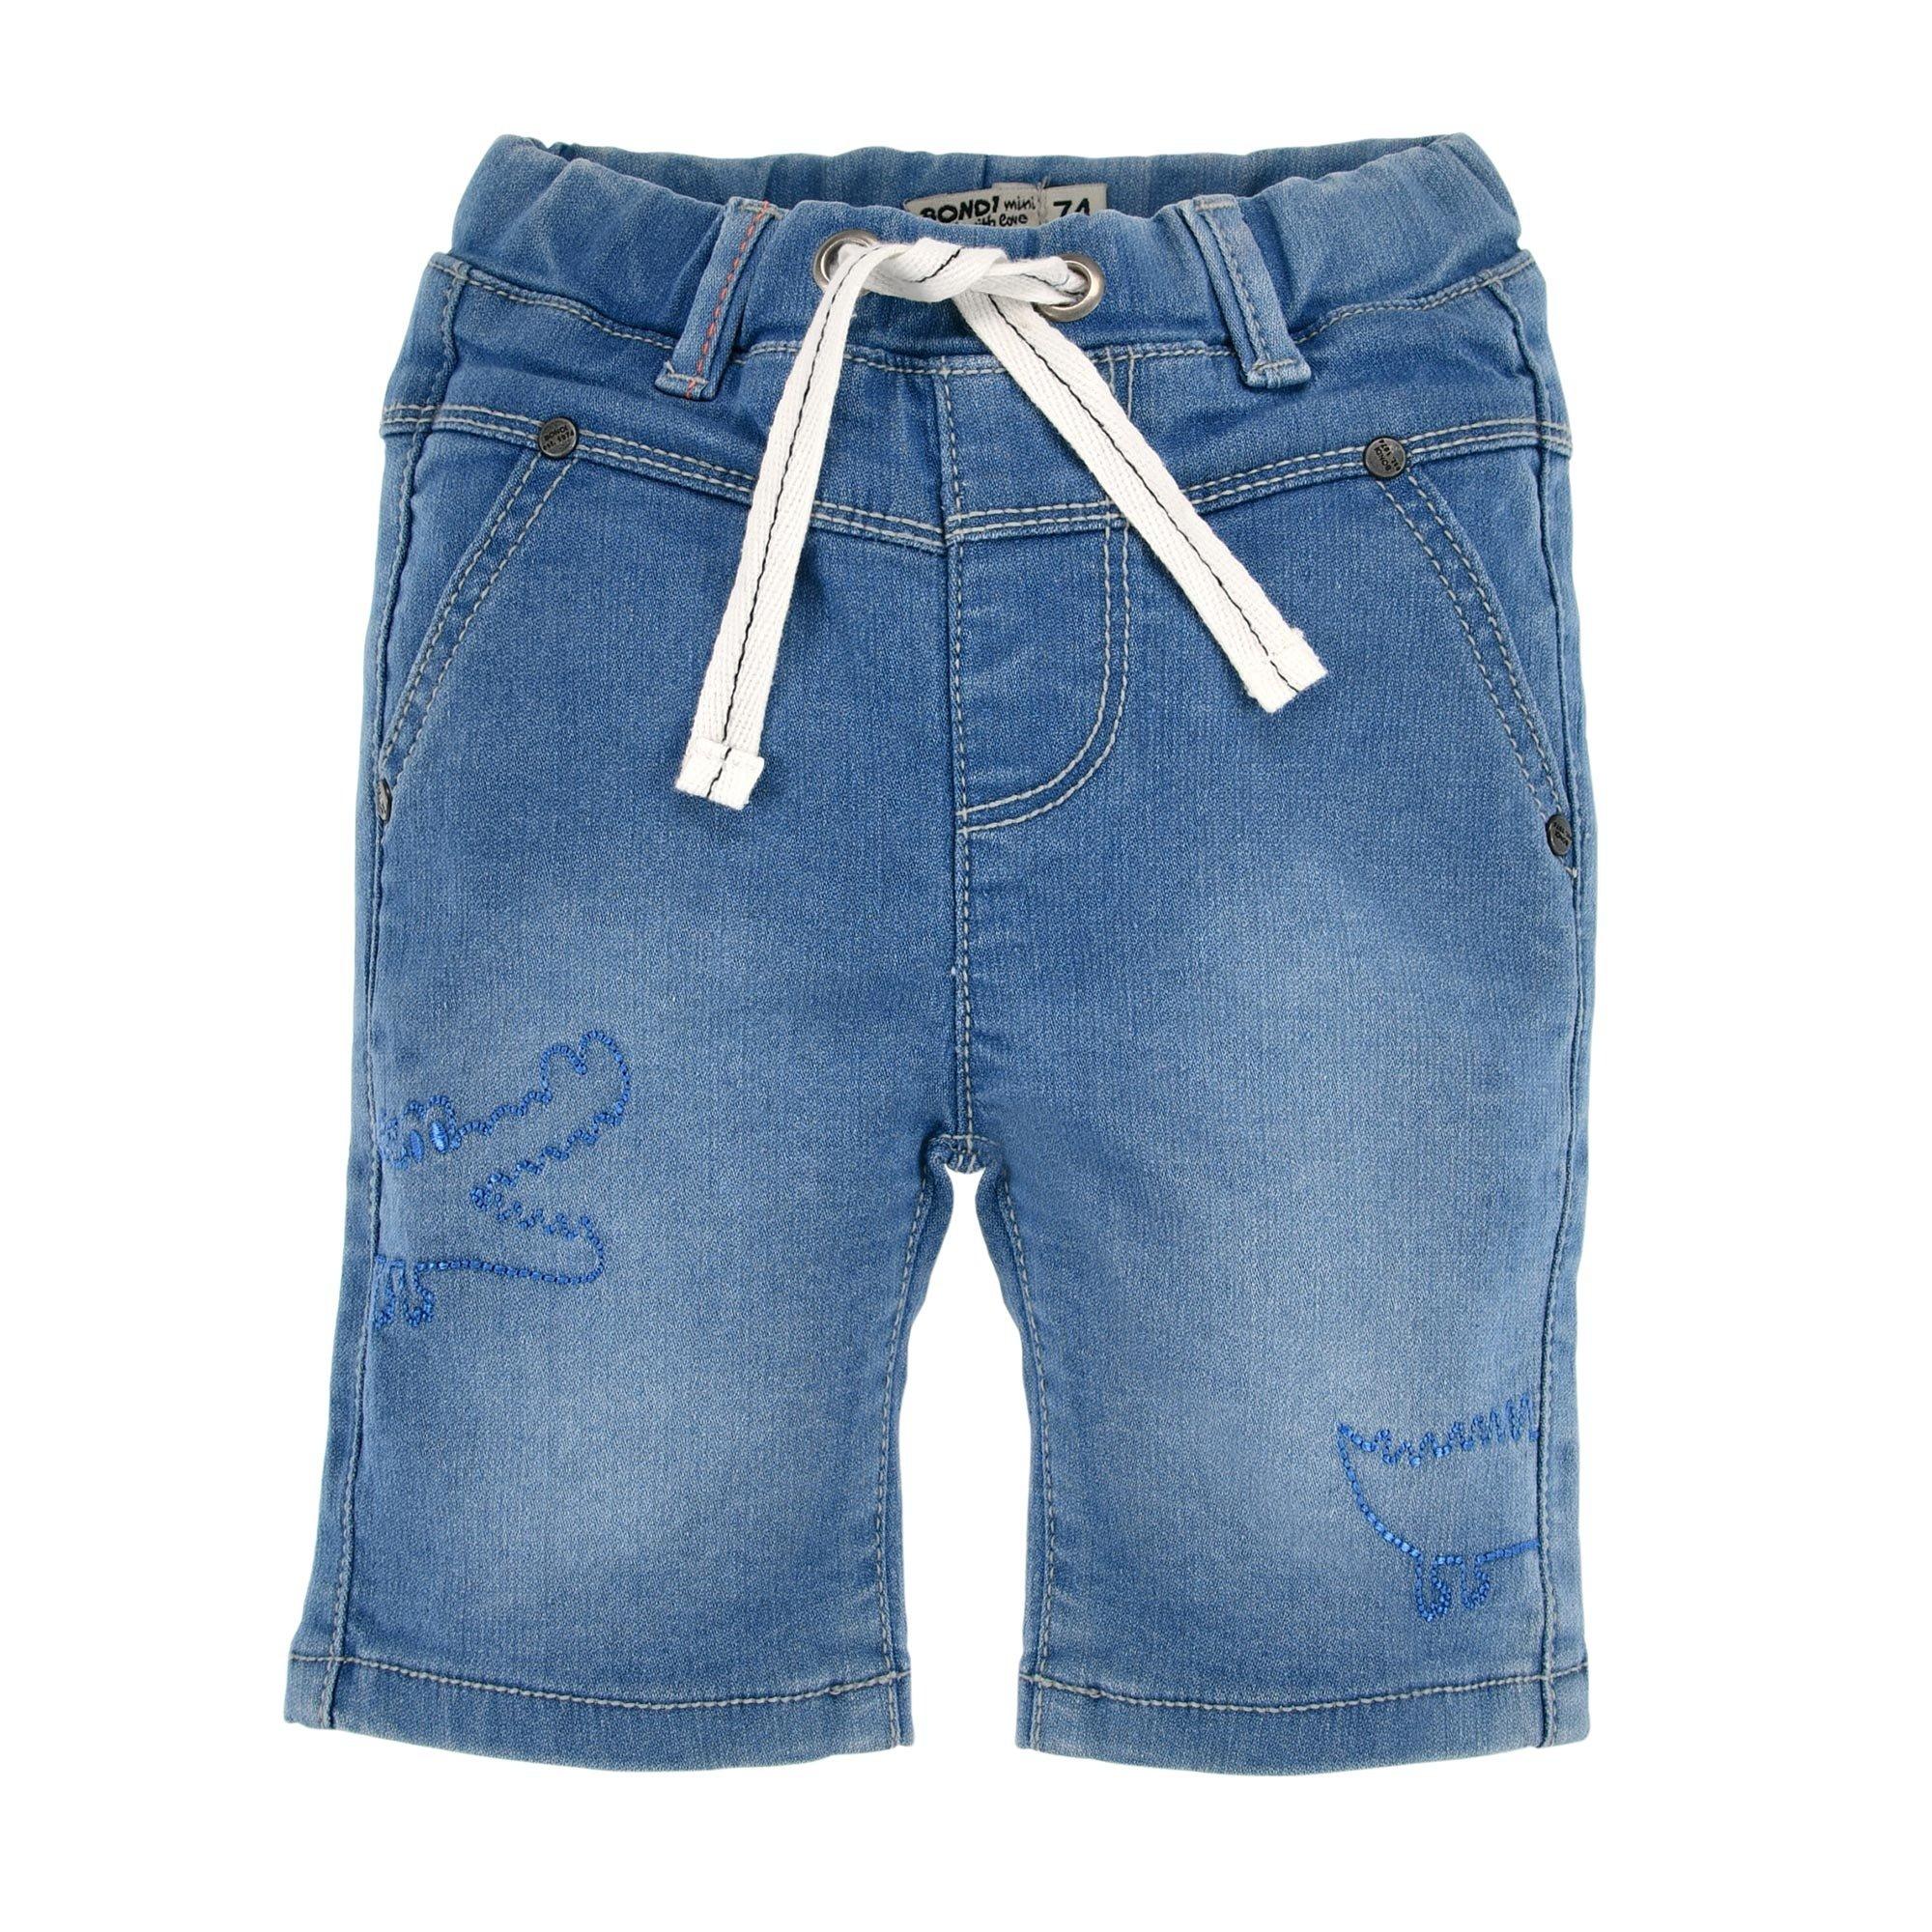 Image of Bondi Kleinkinder Jeans Shorts Kroko - 74